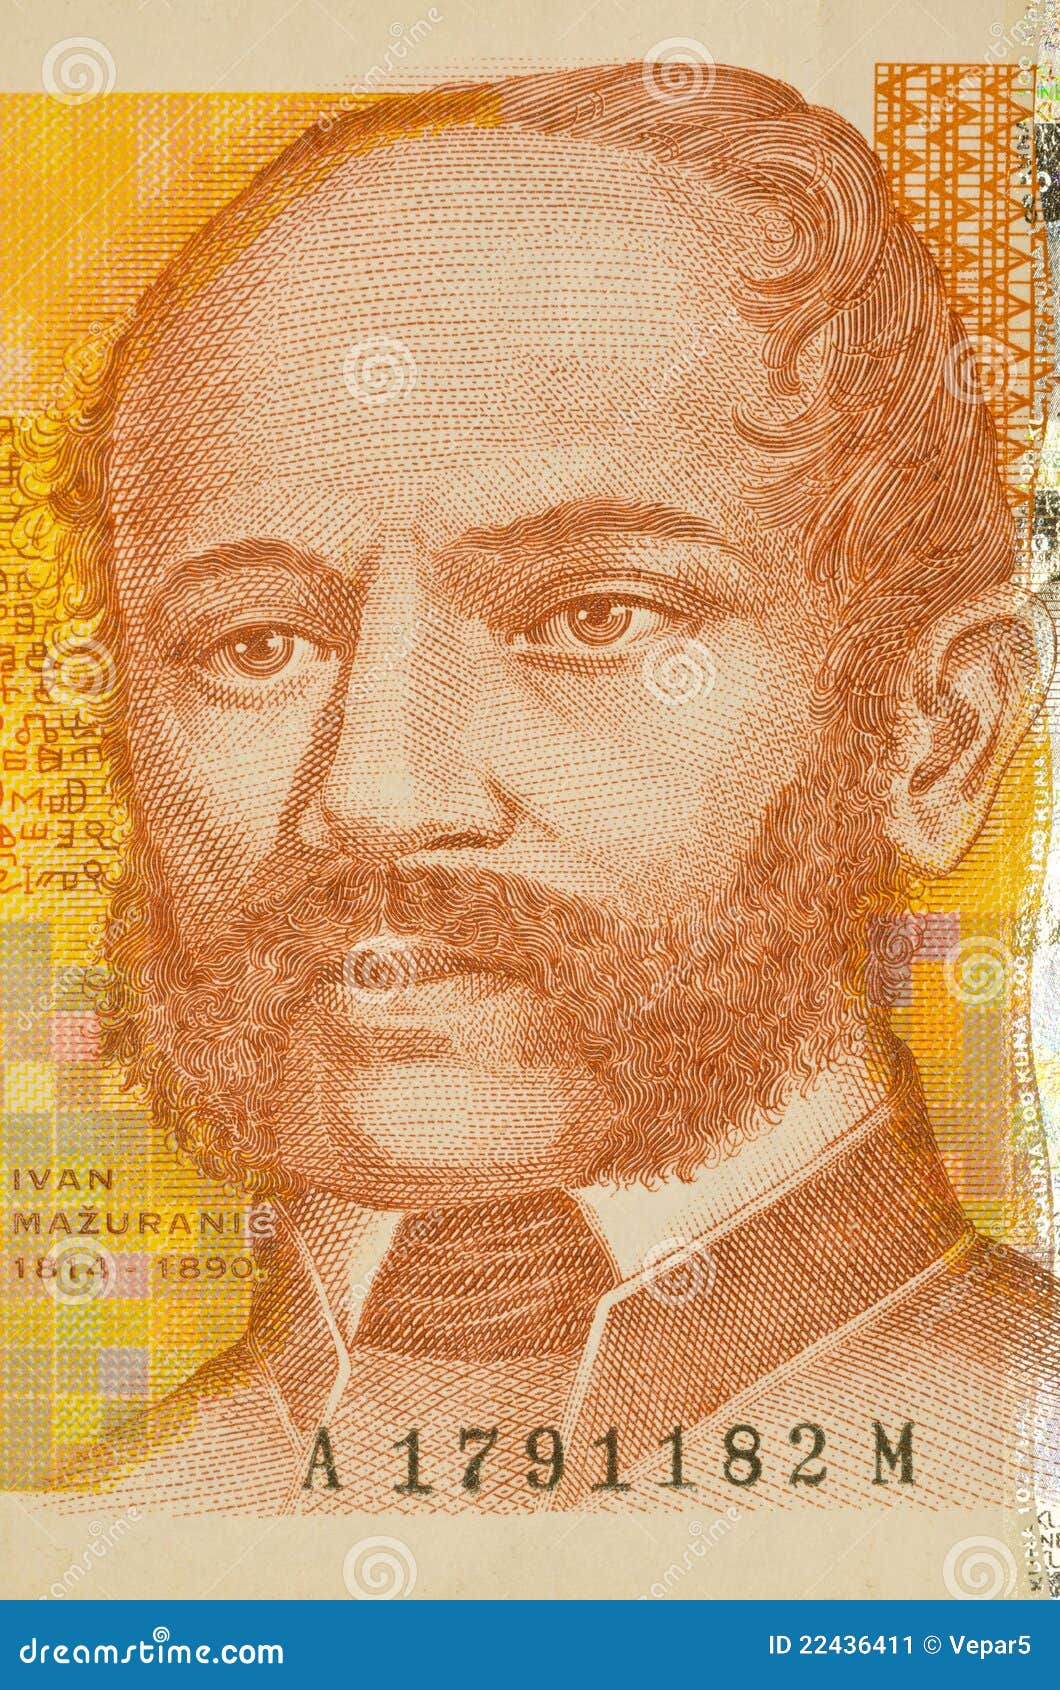 Hundred Kuna Croatian Banknote Stock Image - Image of papermoney ...